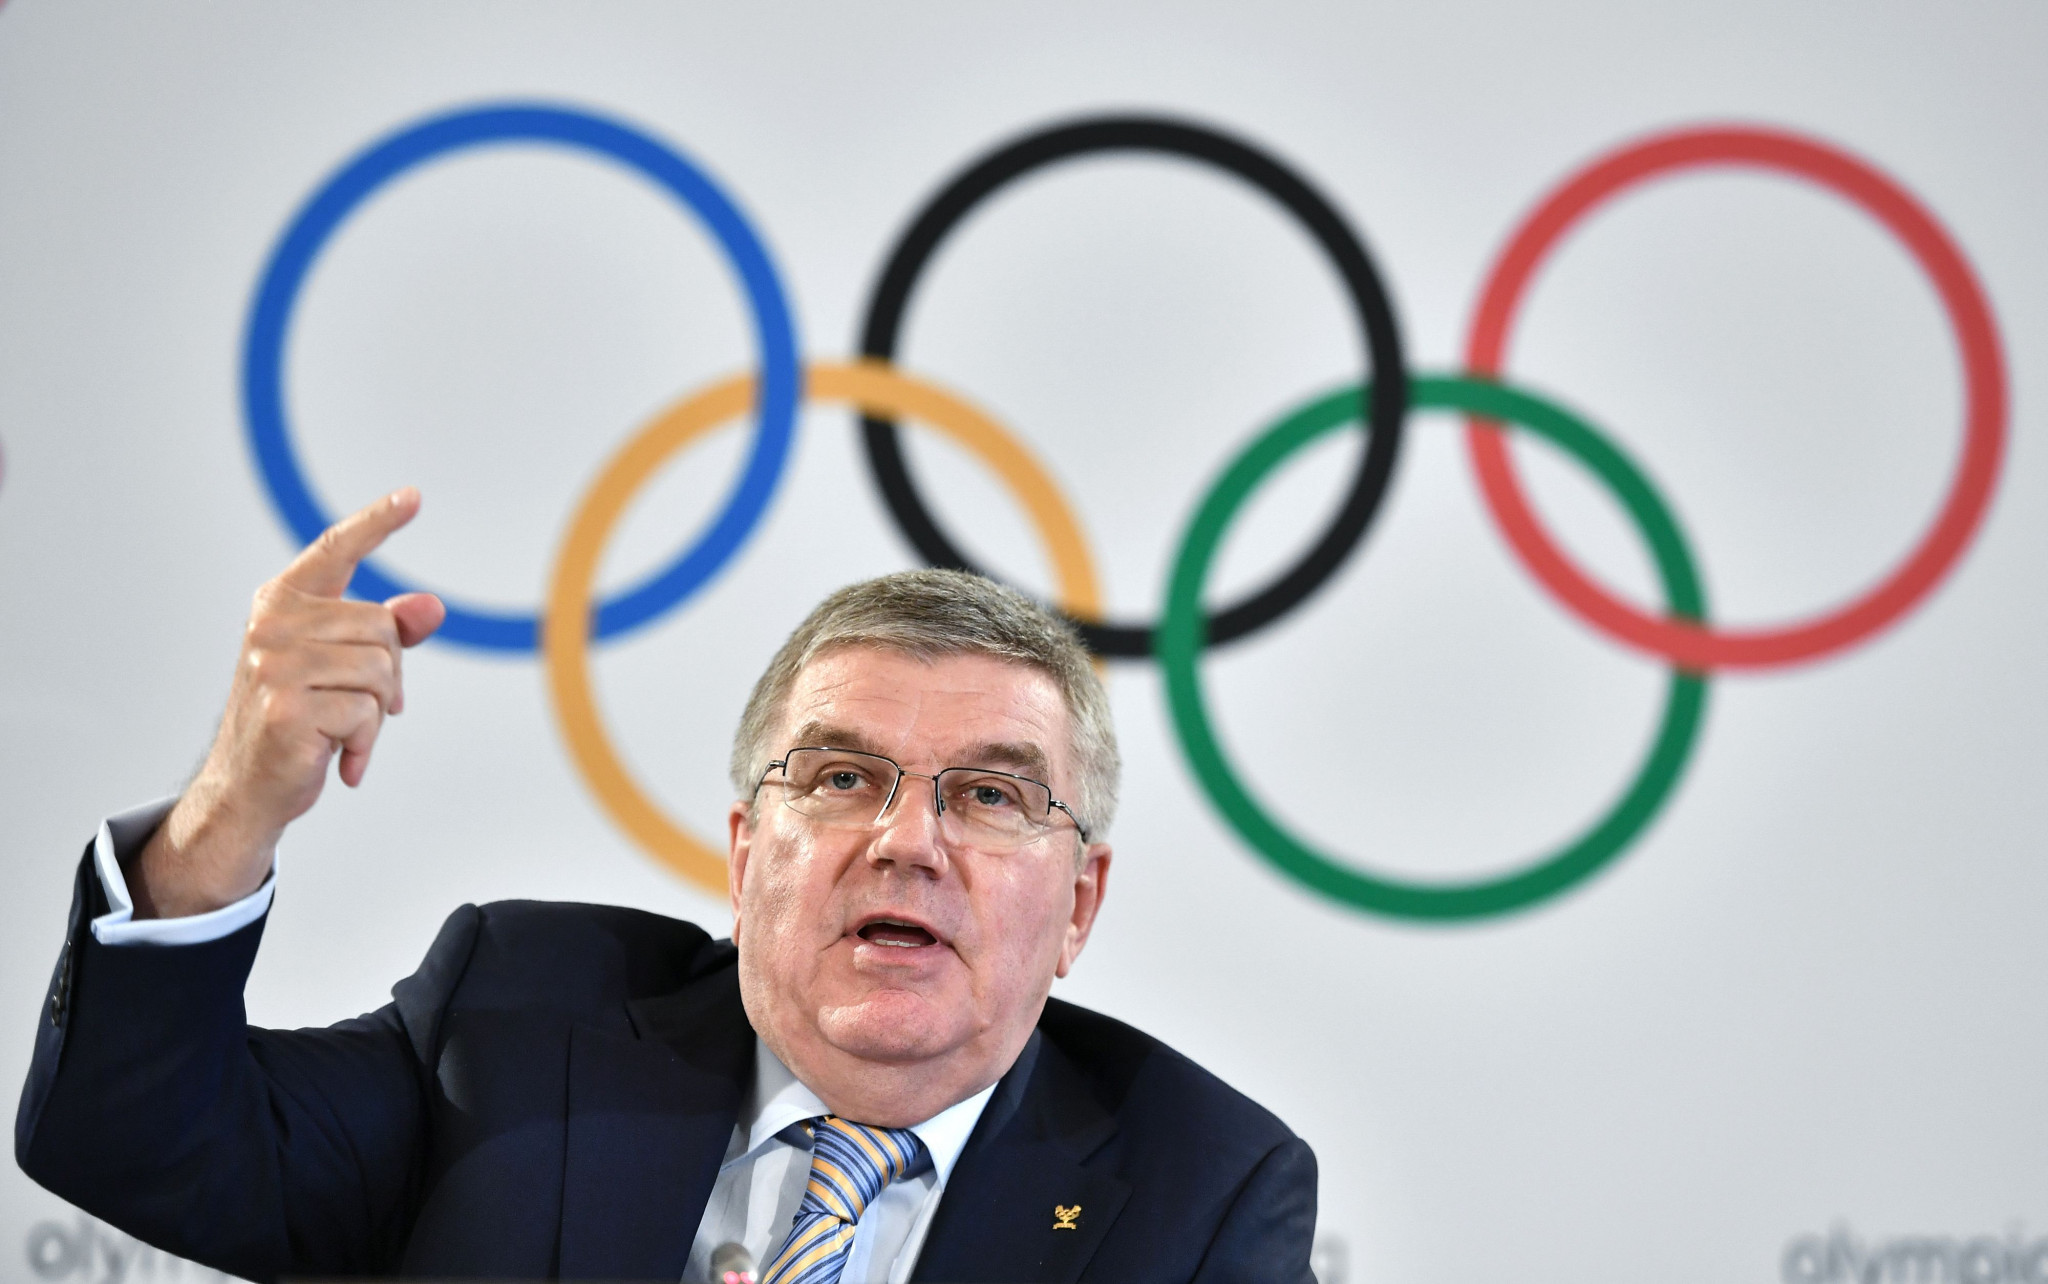 IOC President Thomas Bach has encouraged Bulgaria to bid for the 2024 Games ©Getty Images